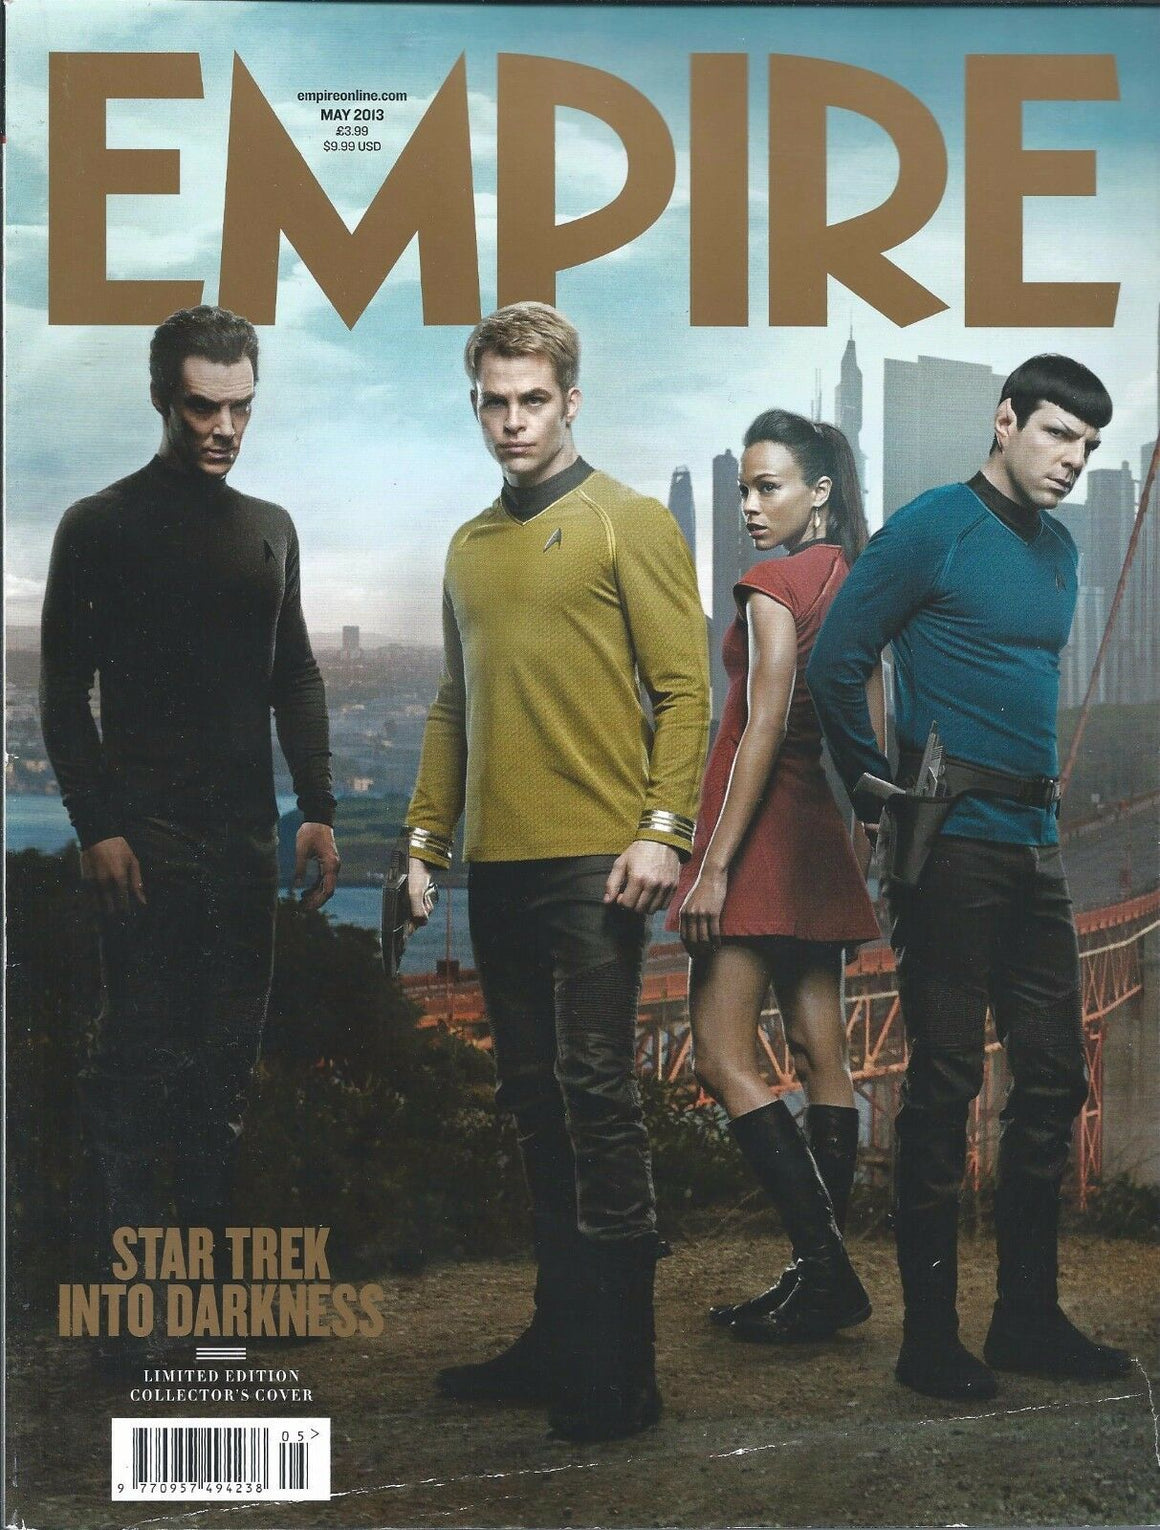 EMPIRE MAGAZINE #287 MAY 2013: STAR TREK BENEDICT CUMBERBATCH COLLECTOR'S COVER